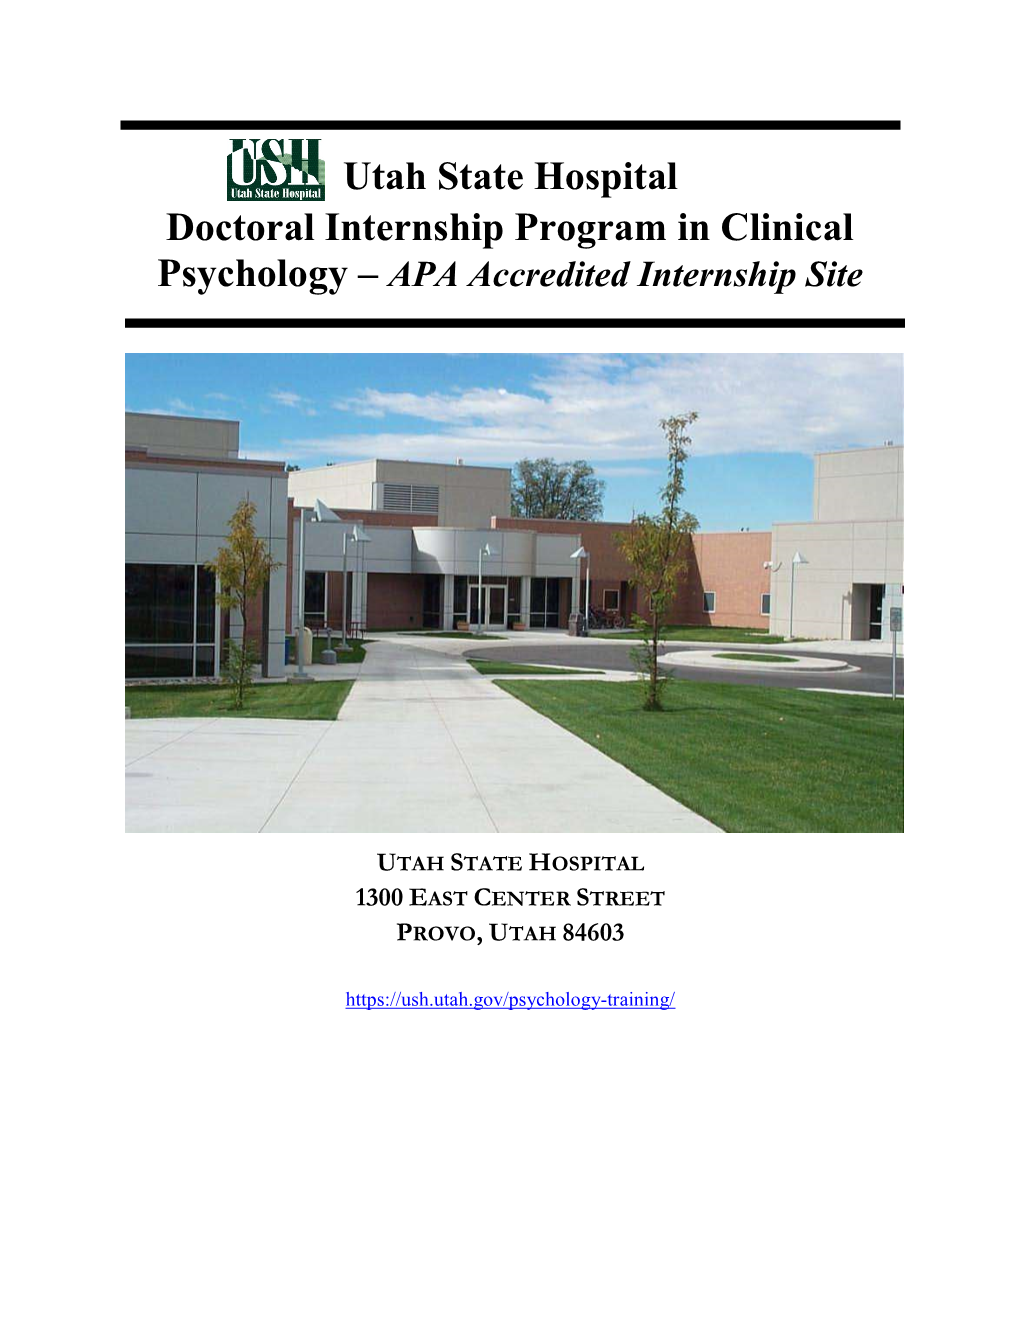 Utah State Hospital Doctoral Internship Program in Clinical Psychology – APA Accredited Internship Site